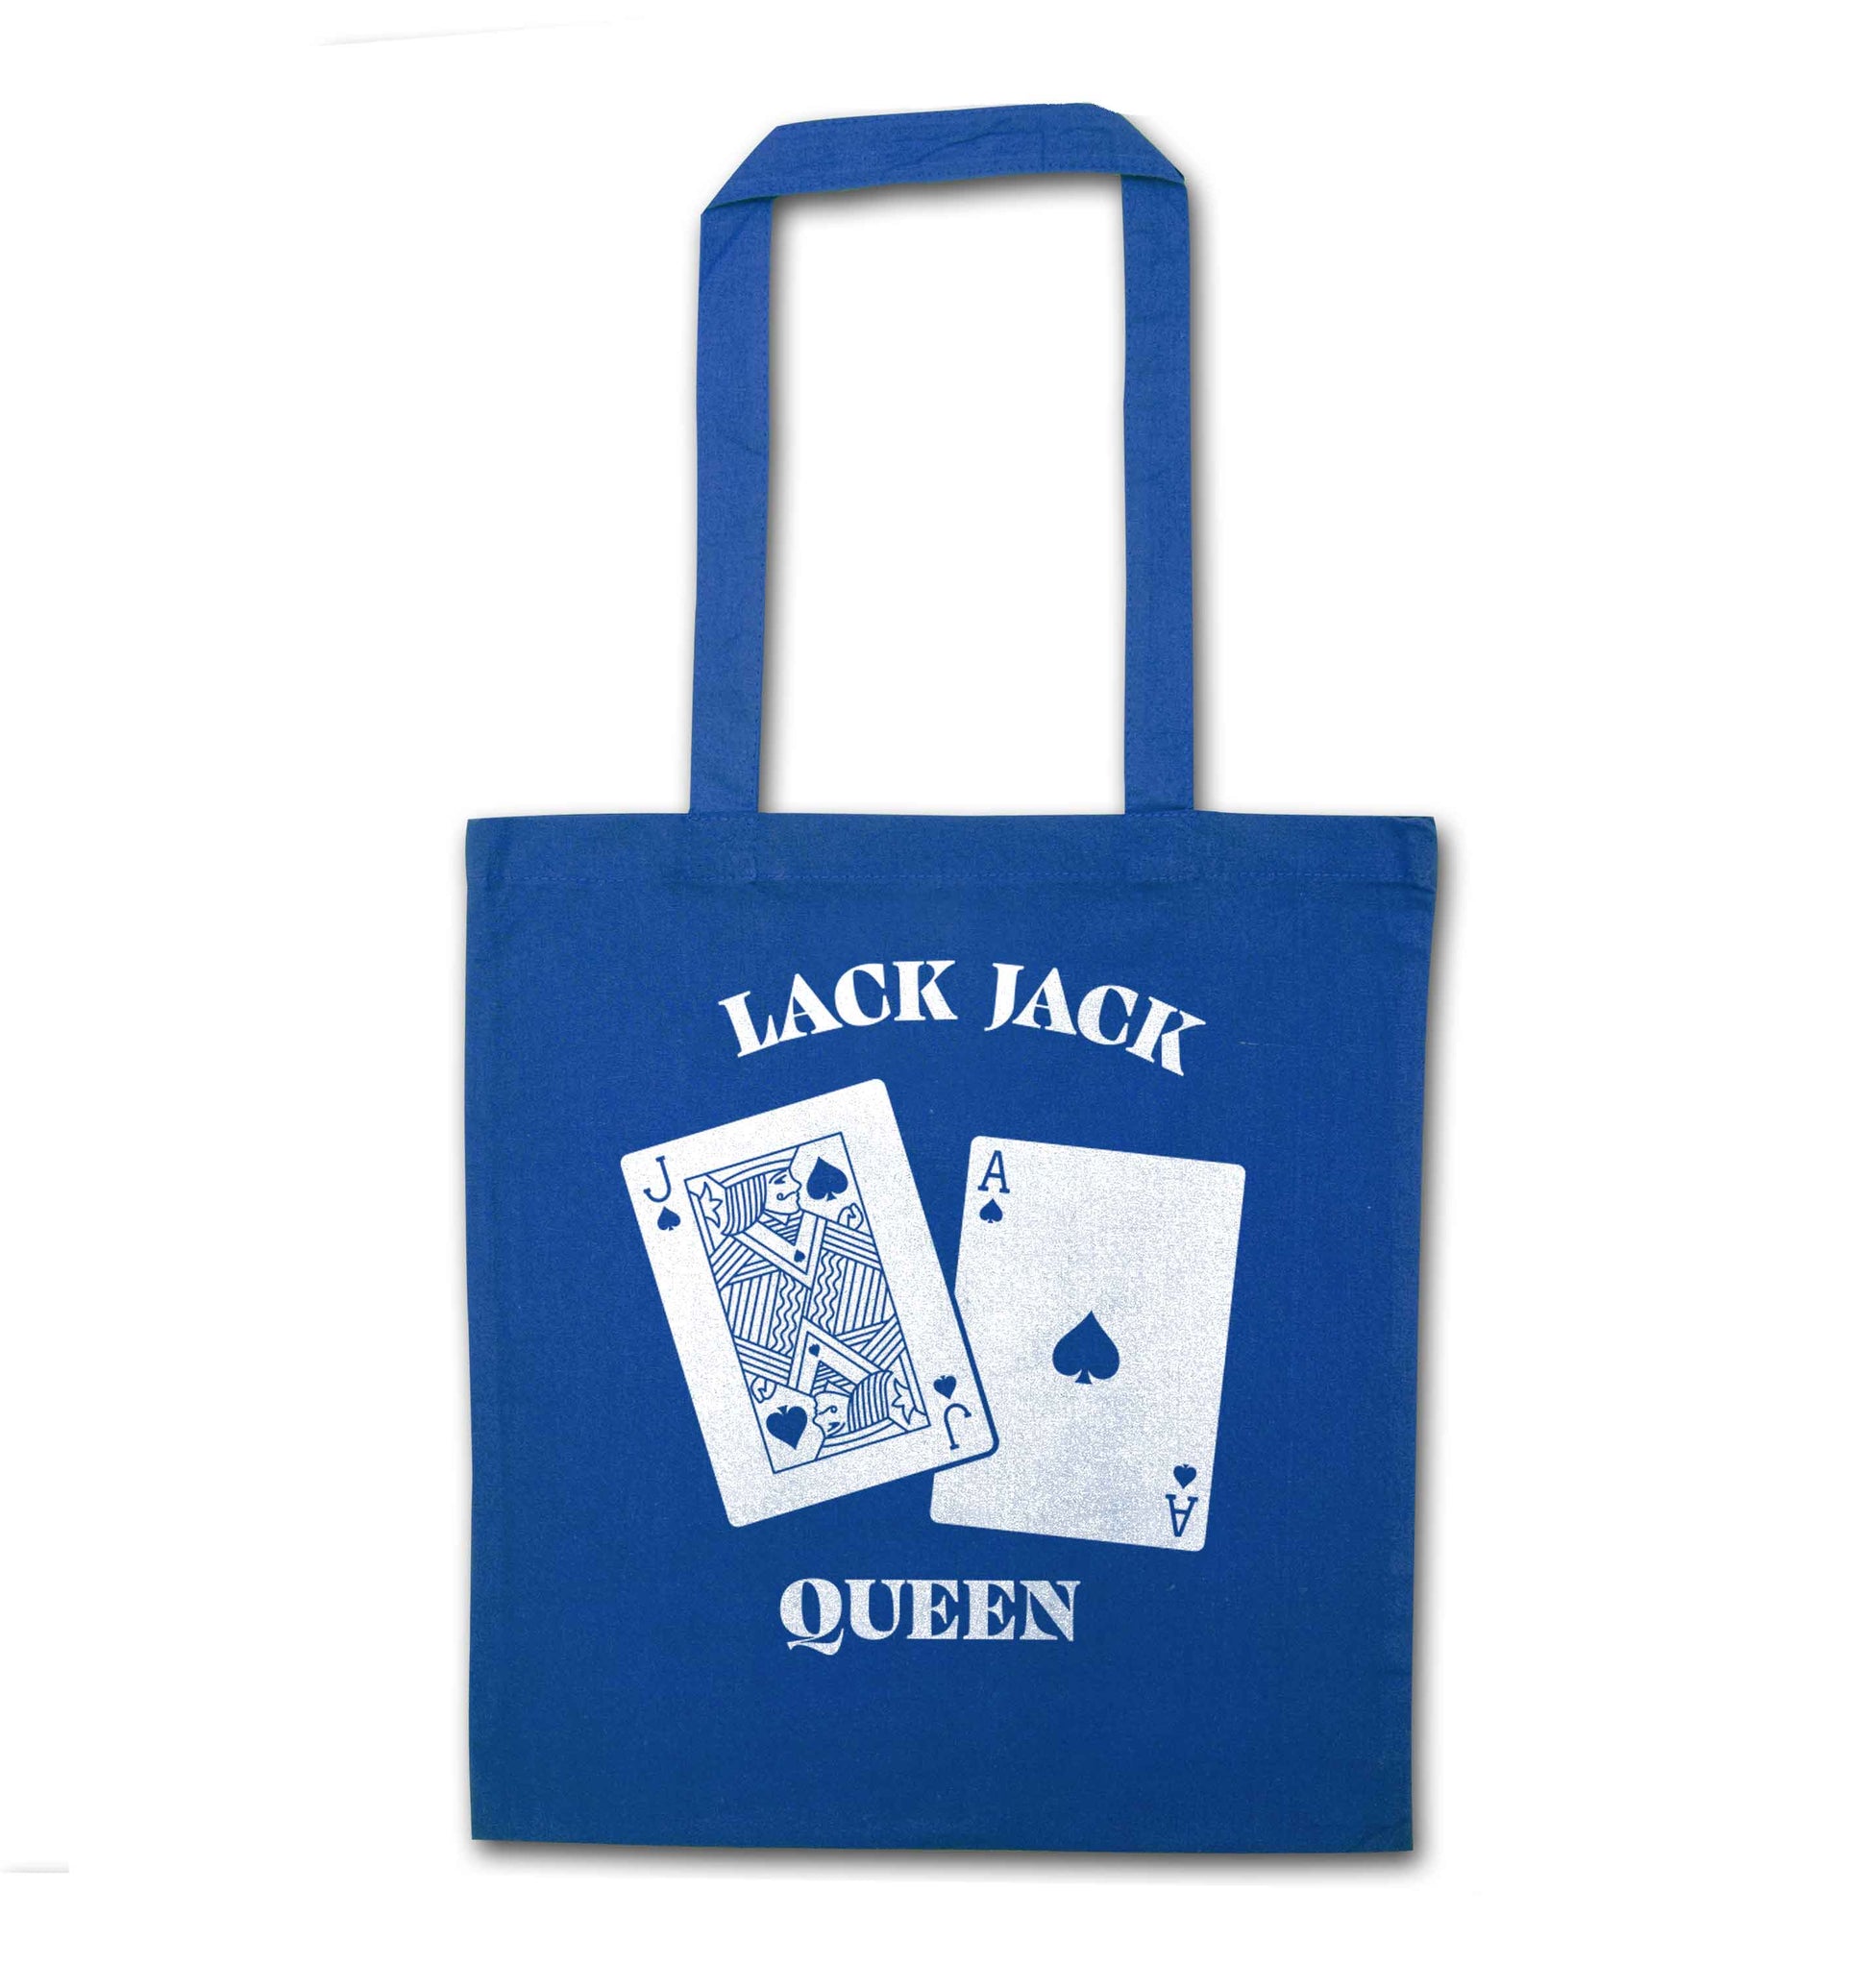 Blackjack queen blue tote bag